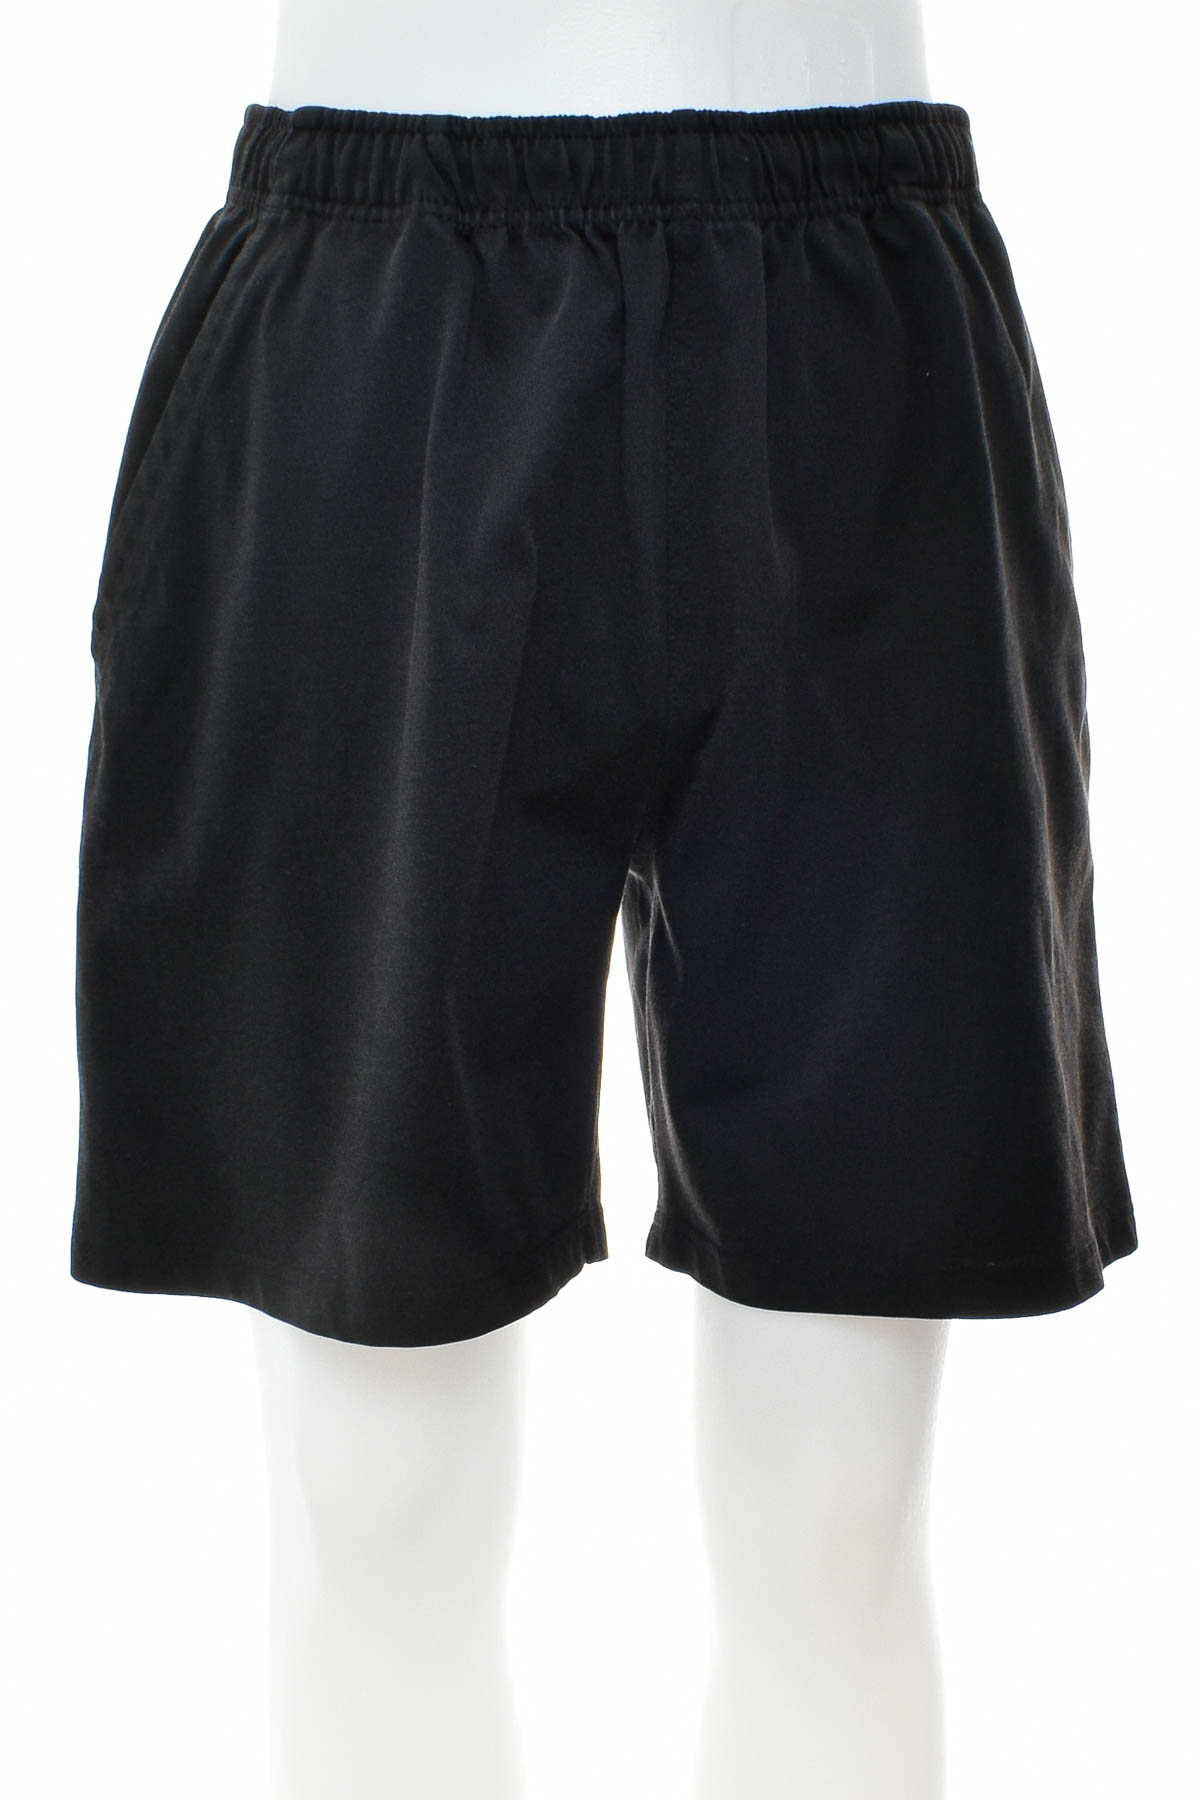 Men's shorts - CRANE SPORTS - 0